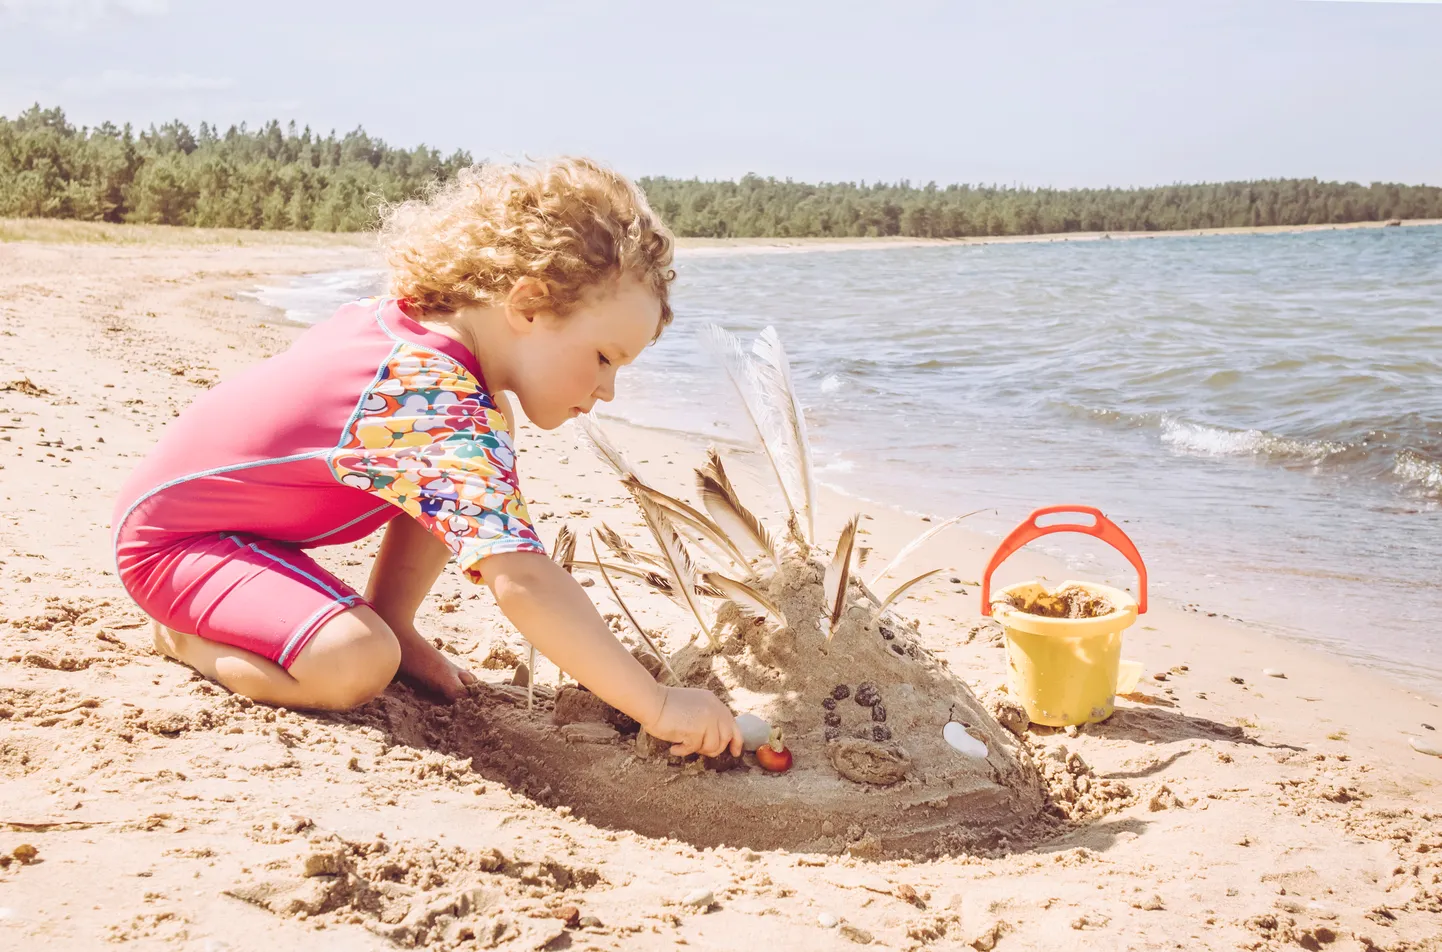 Tüdruk Hiiumaa rannaliival mängimas. Foto illustratiivne.